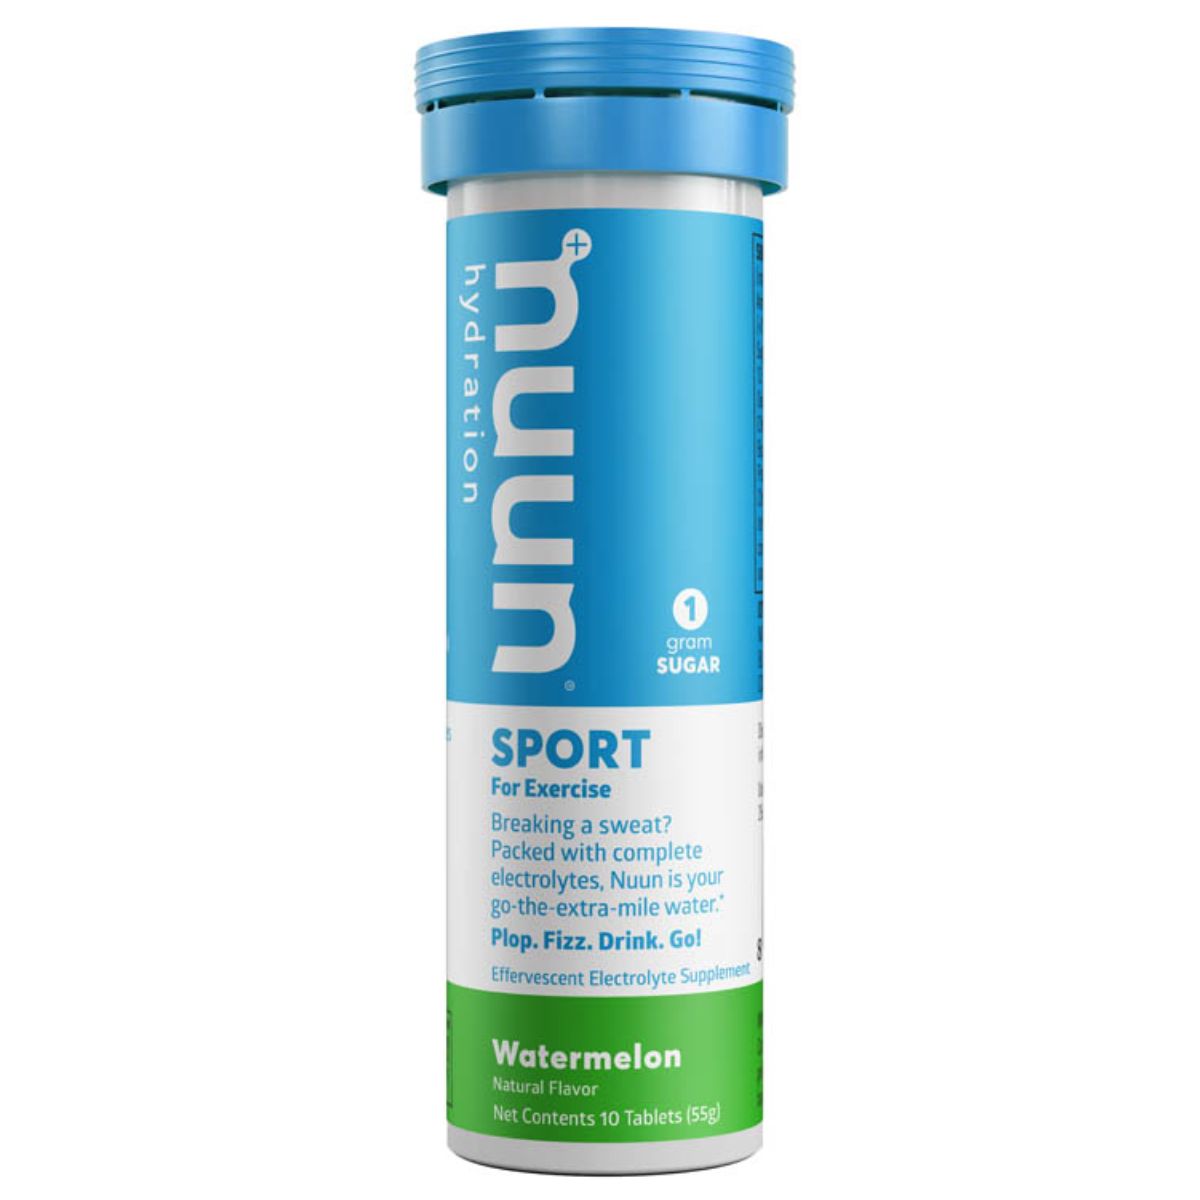 Nuun Sport Drink Mix Watermelon - Box of 8 - 10 servings